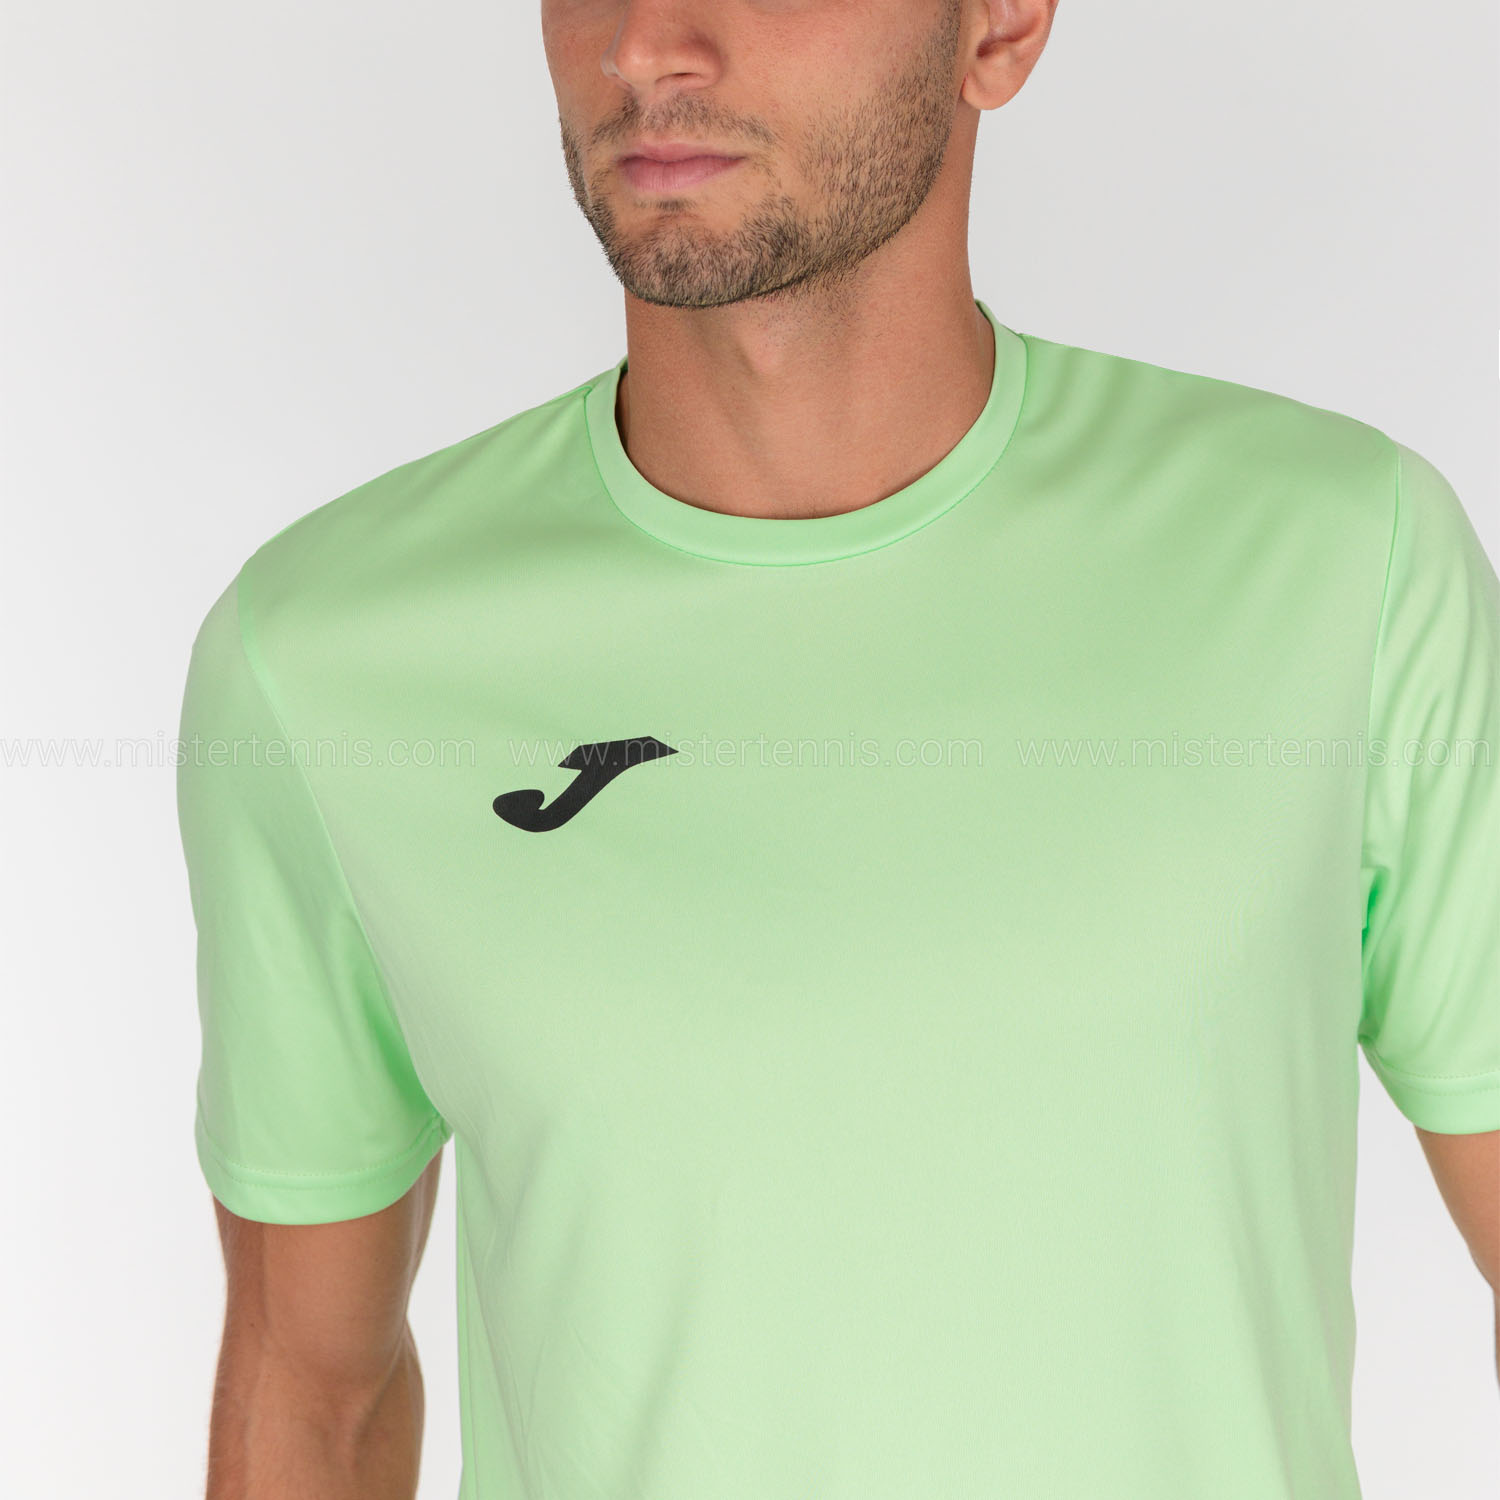 Joma Combi Camiseta - Fluor Green